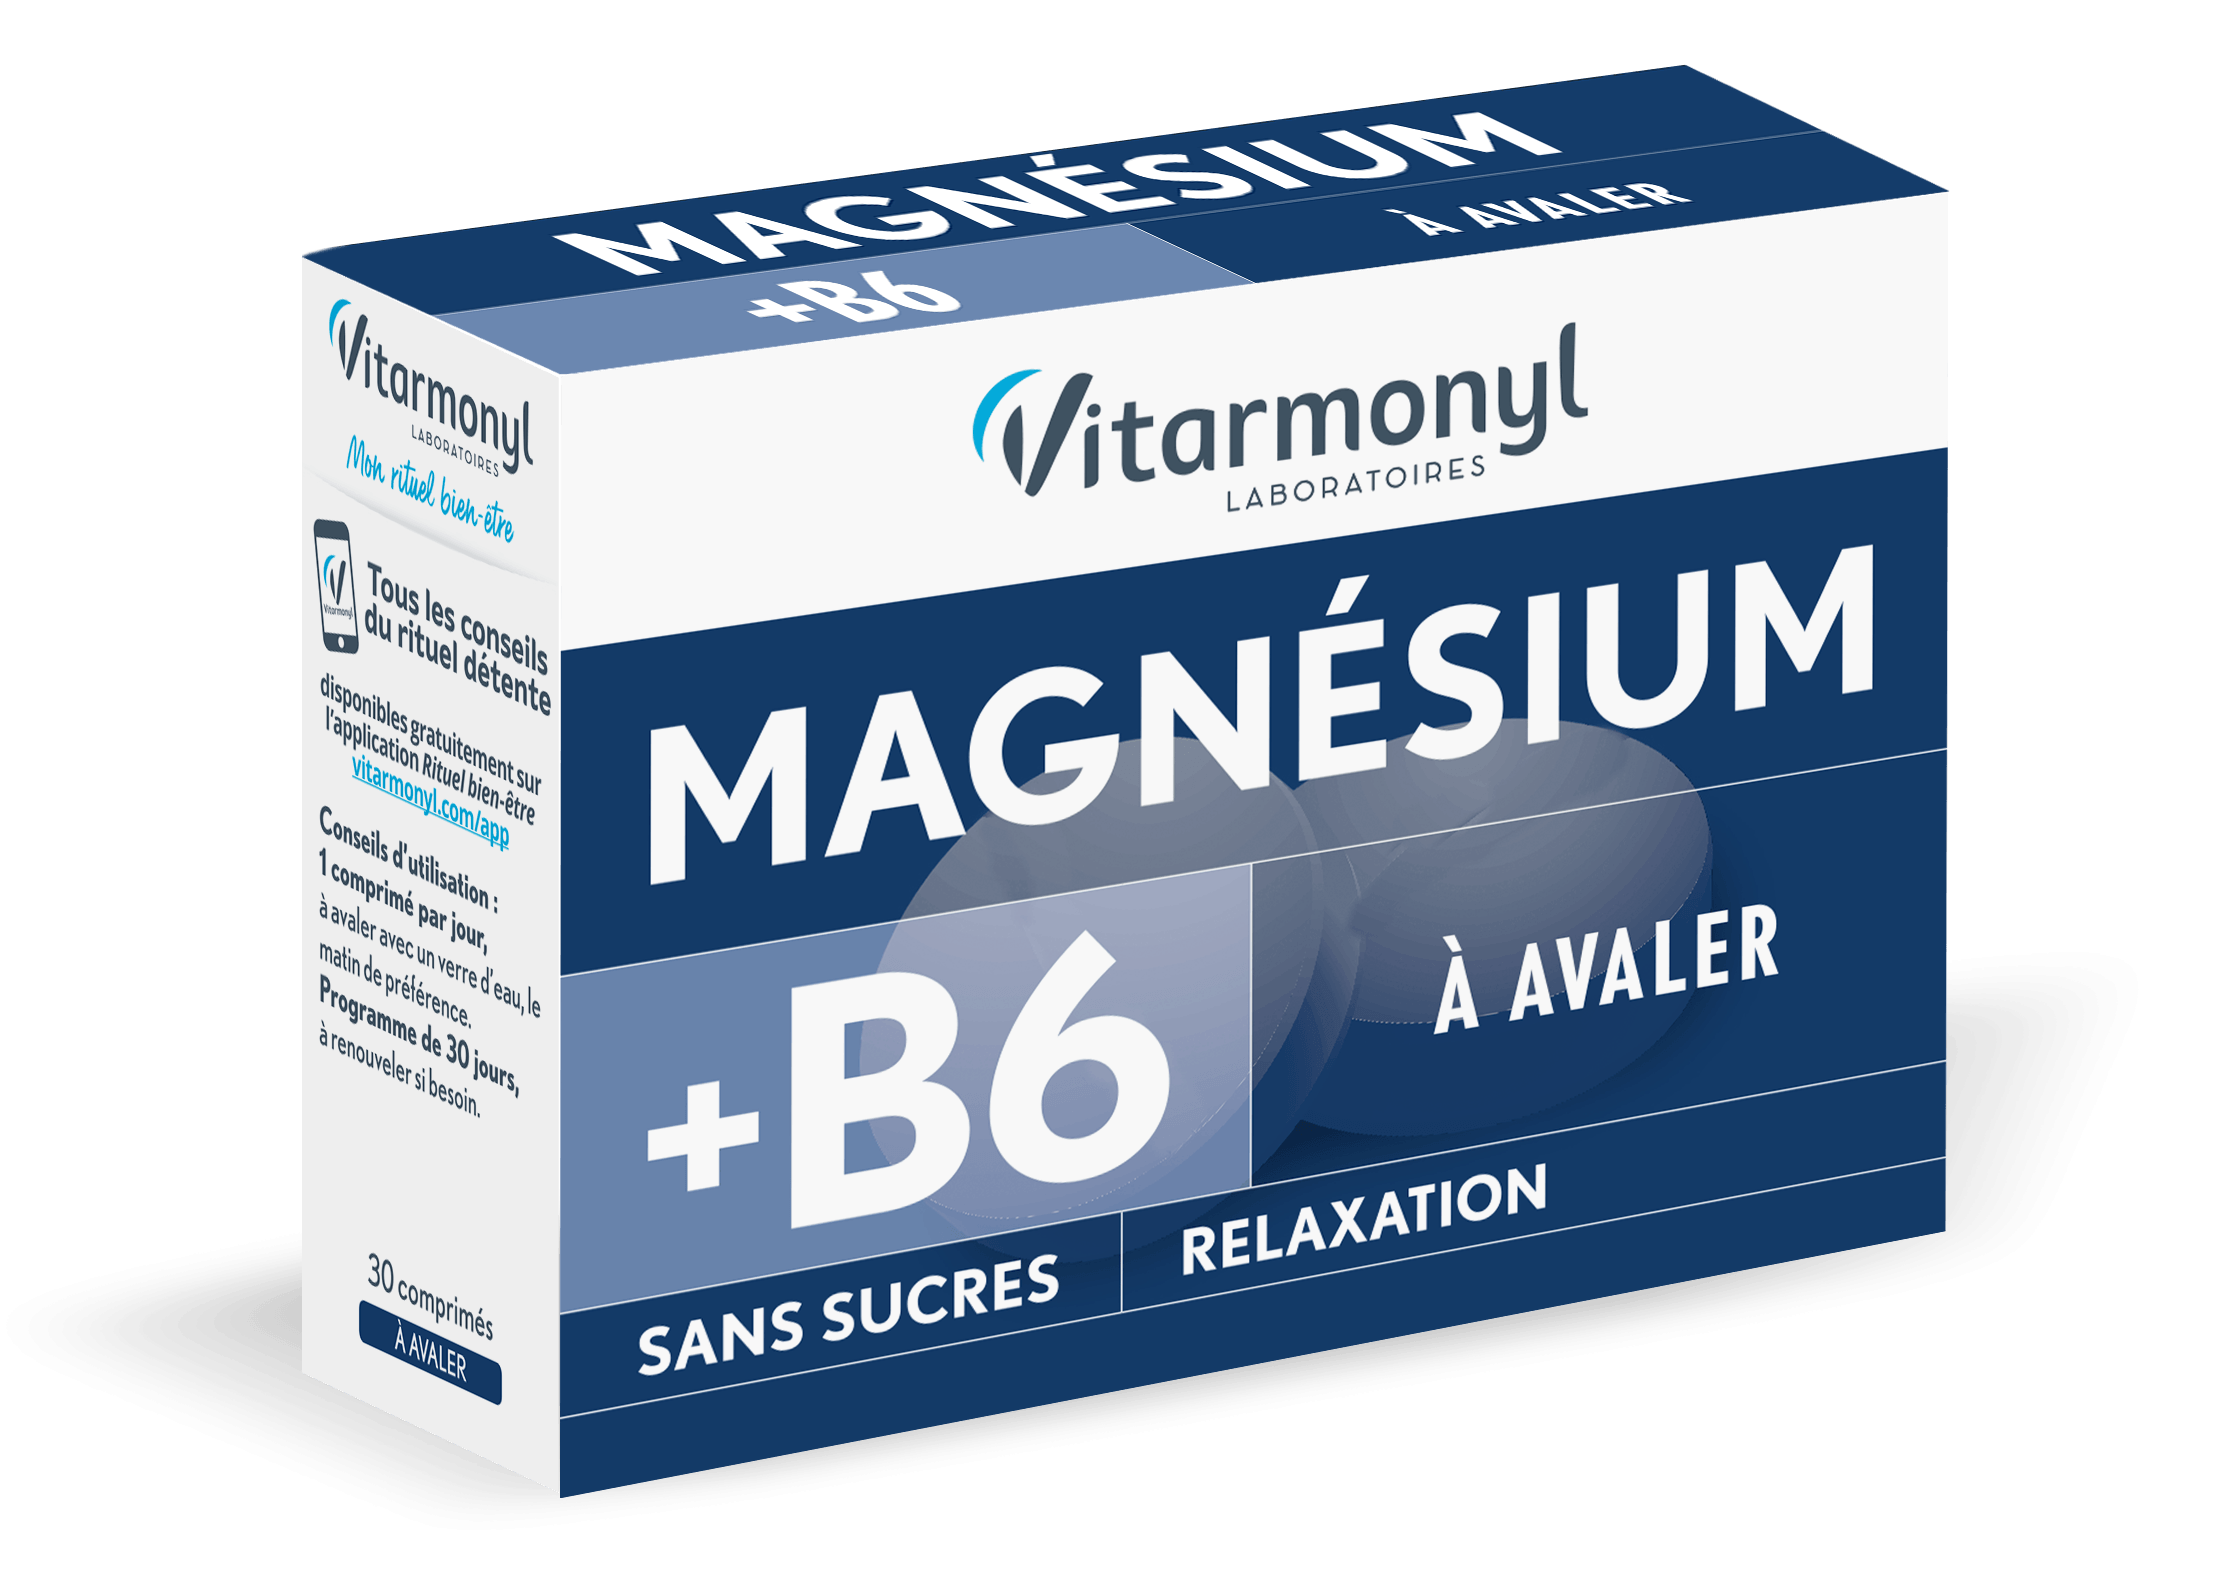 Image Magnésium + B6 – A avaler